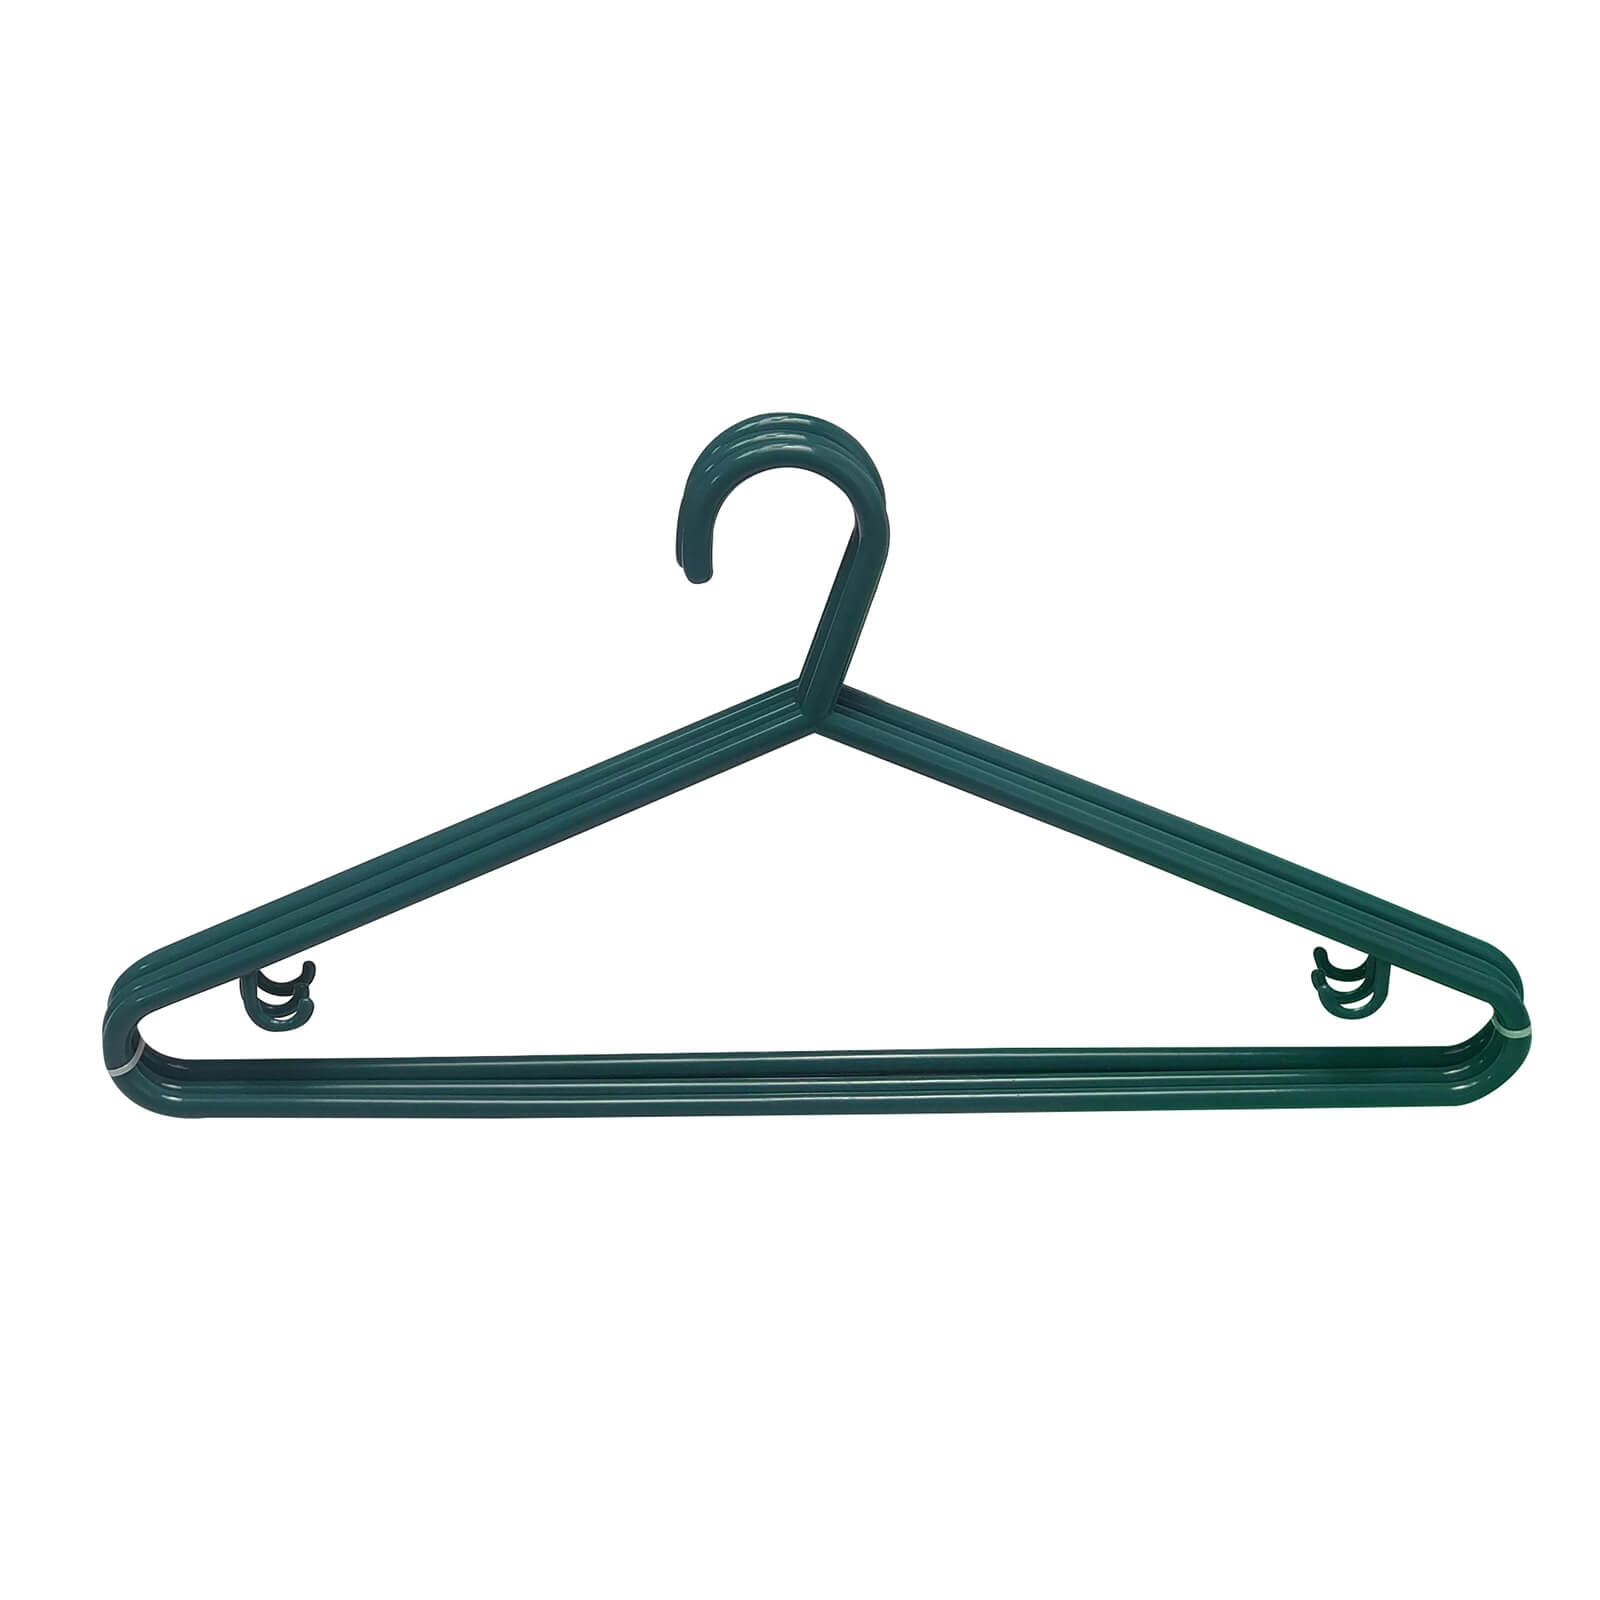 20 Plastic Clothes Hangers - Teal